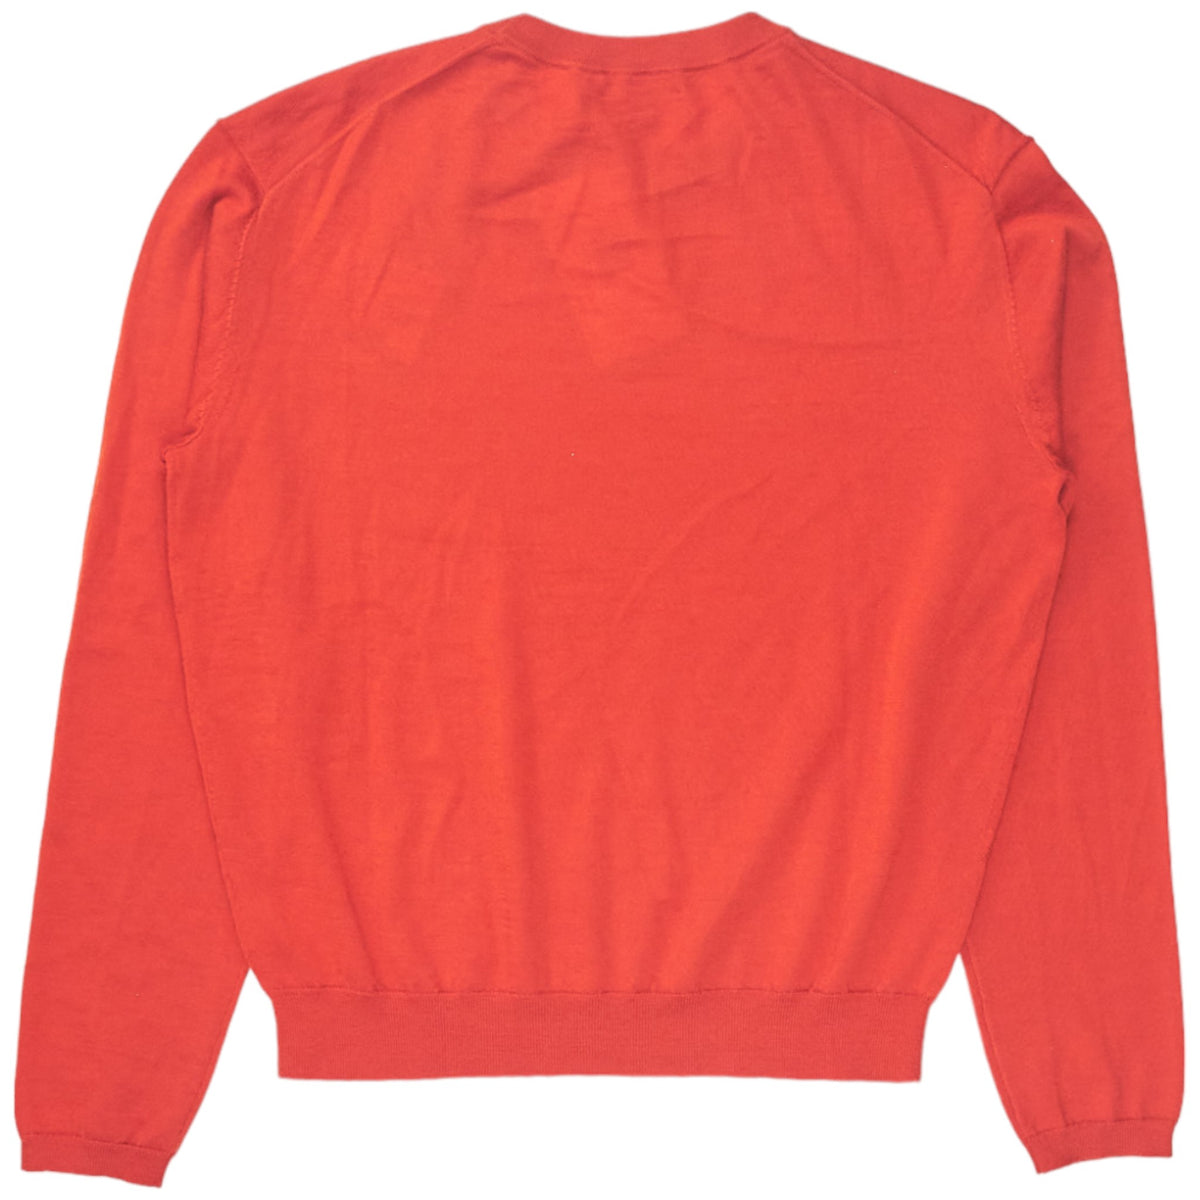 N. Peal Burnt Orange LS Crew Sweater